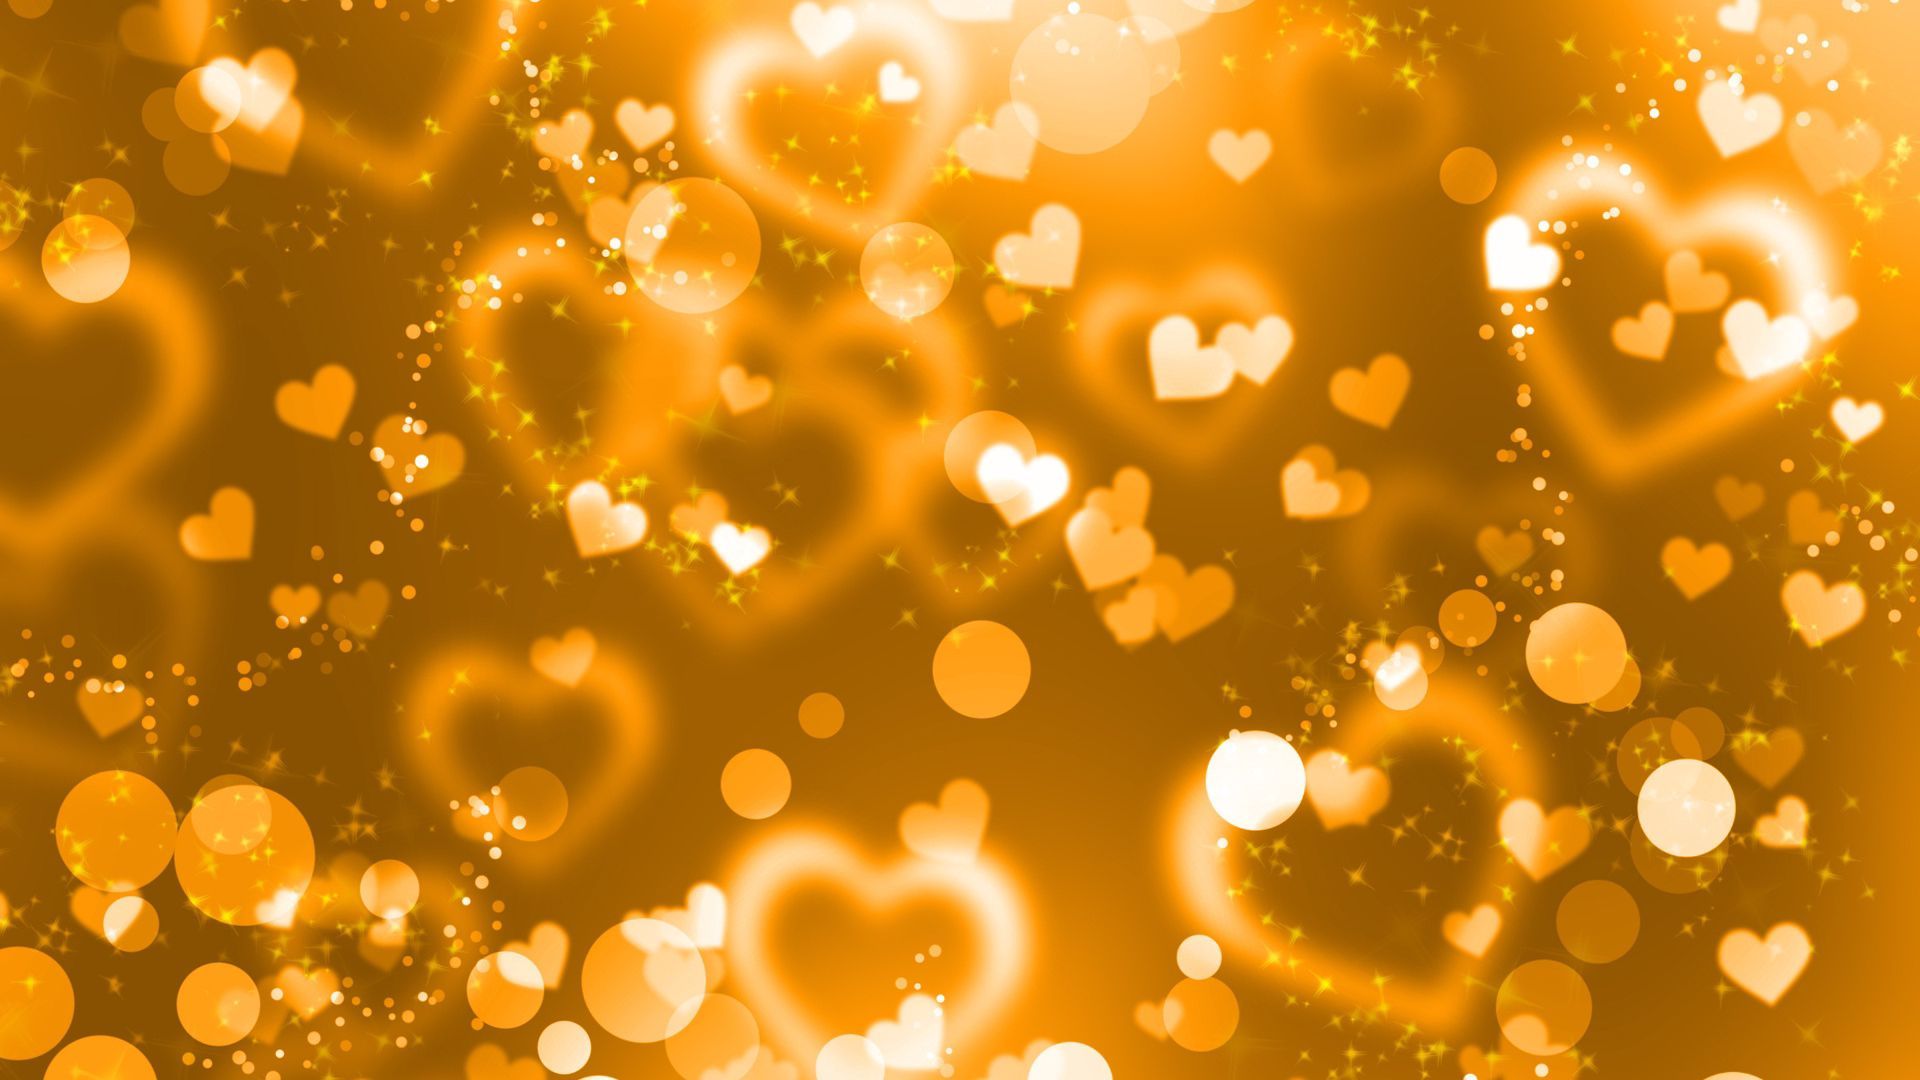 Download wallpaper 1920x1080 glare, hearts, lights, glitter, gold full hd, hdtv, fhd, 1080p HD background